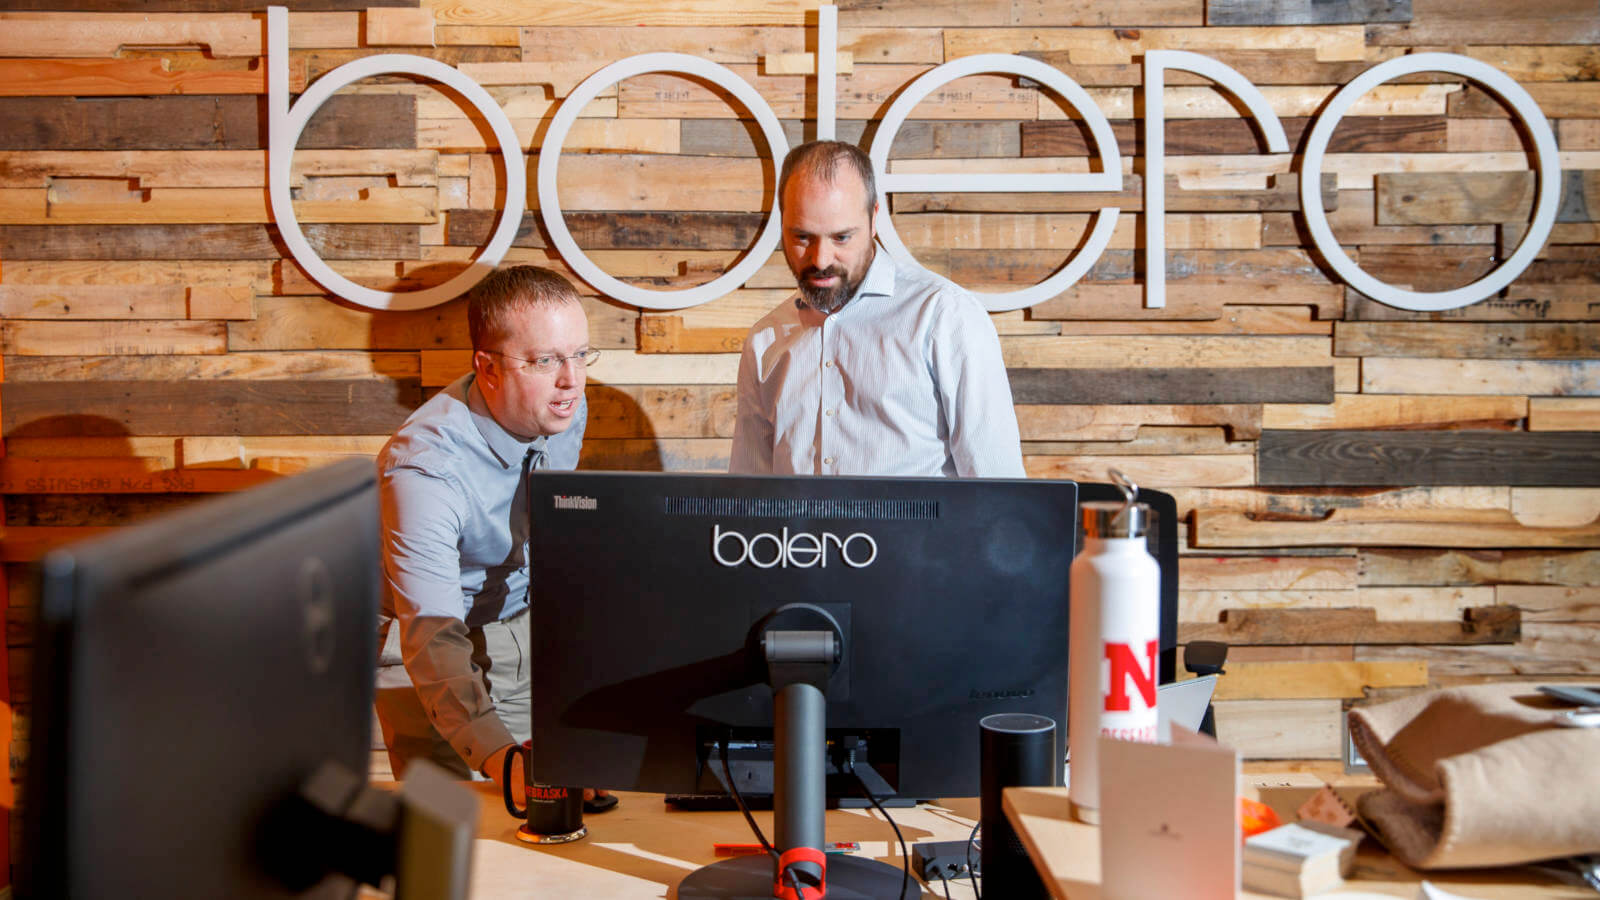 Bolero employees look at computer